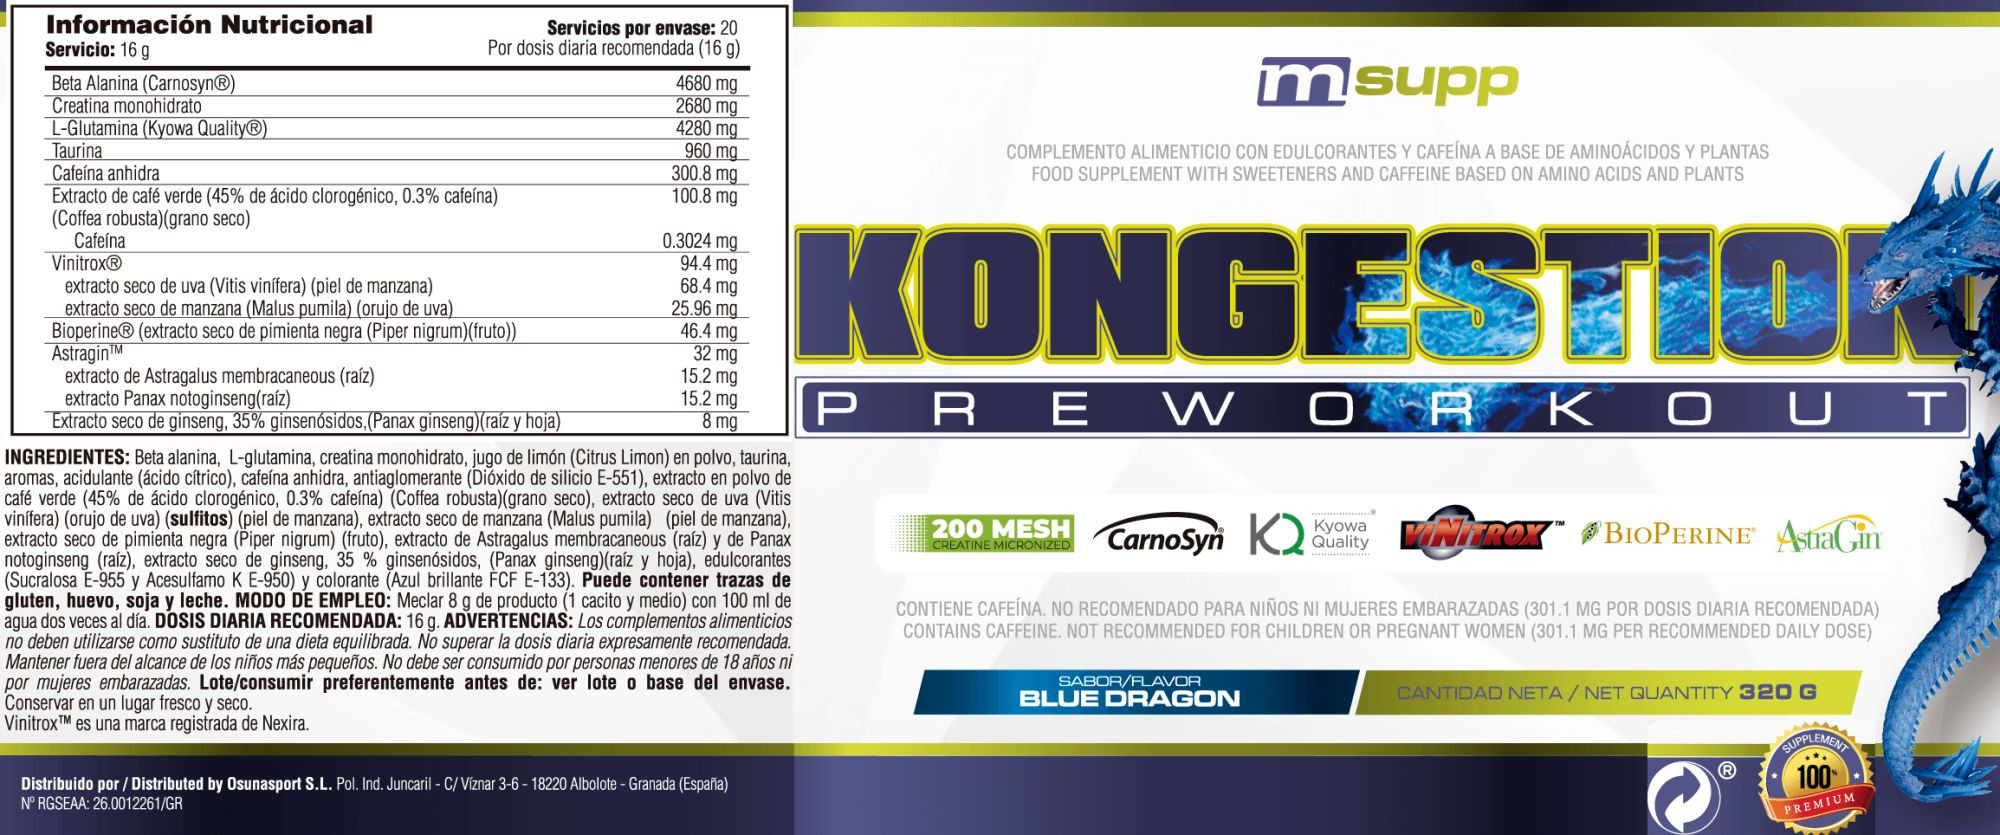 Kongestion Preworkout - 320g De Mm Supplements Sabor Blue Dragon  MKP